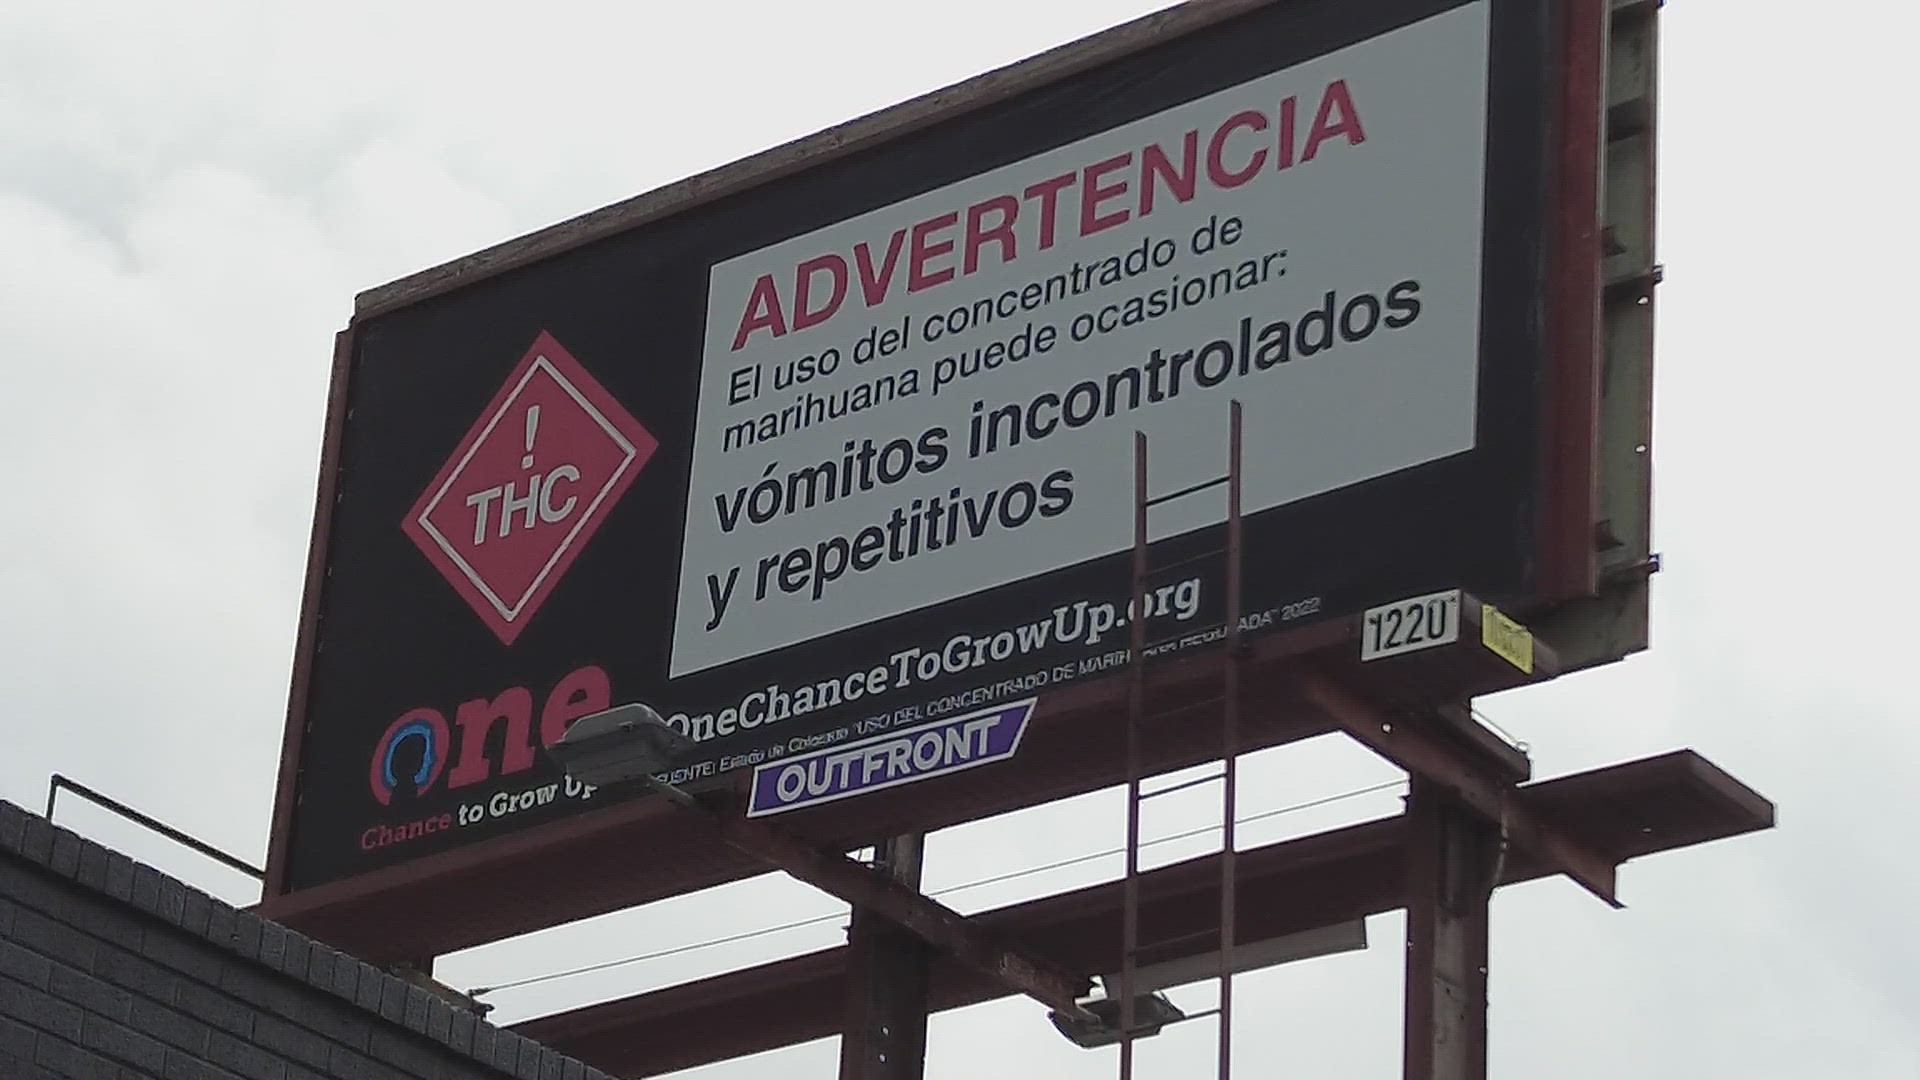 The nonprofit One Chance to Grow Up put up four new billboards regarding marijuana and teens.